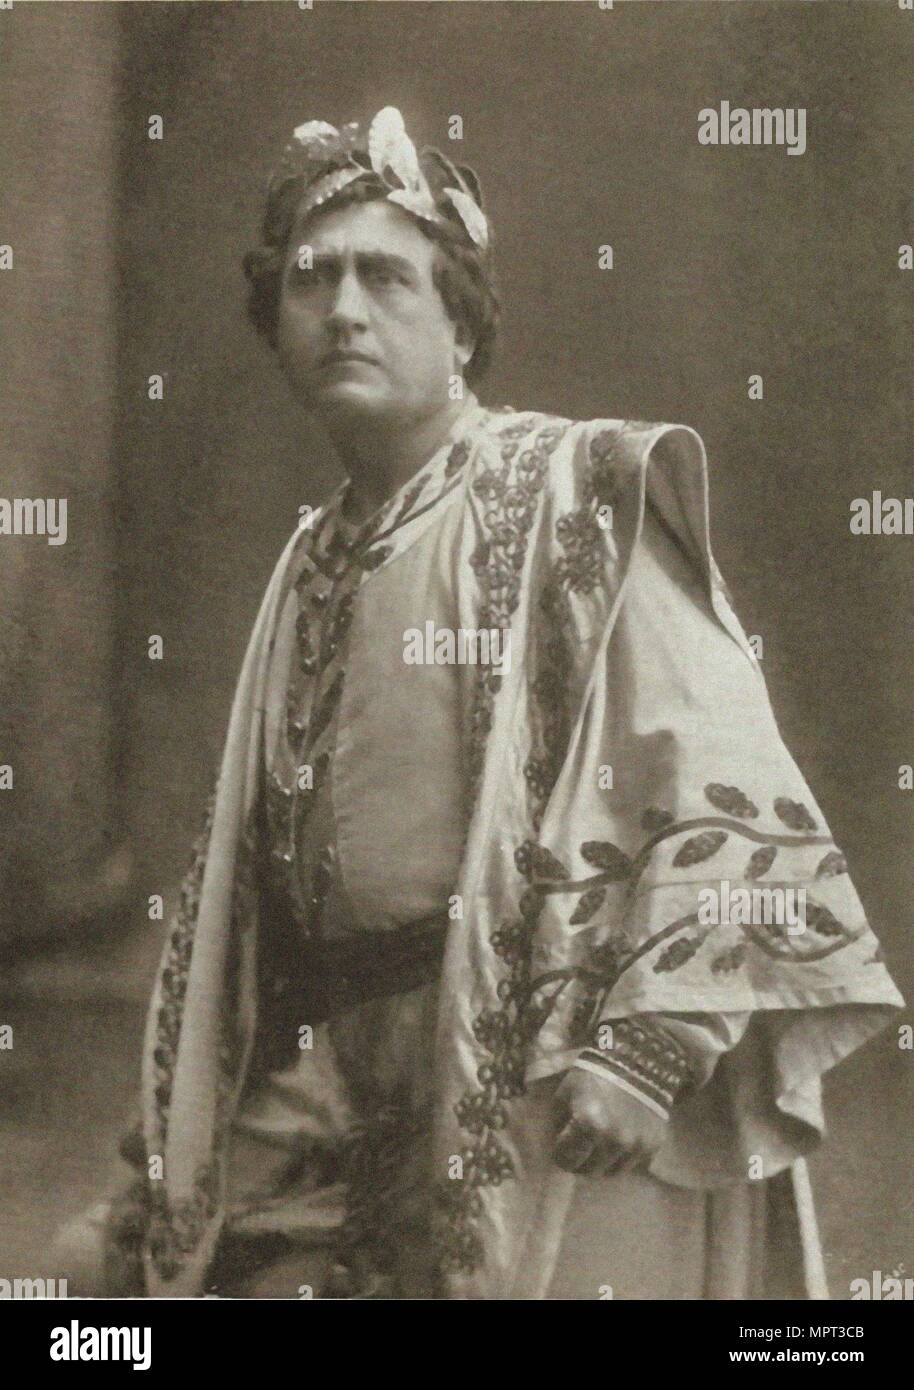 Wilhelm Grüning as Rienzi in Opera Rienzi by Richard Wagner, Berlin, 1907. Stock Photo